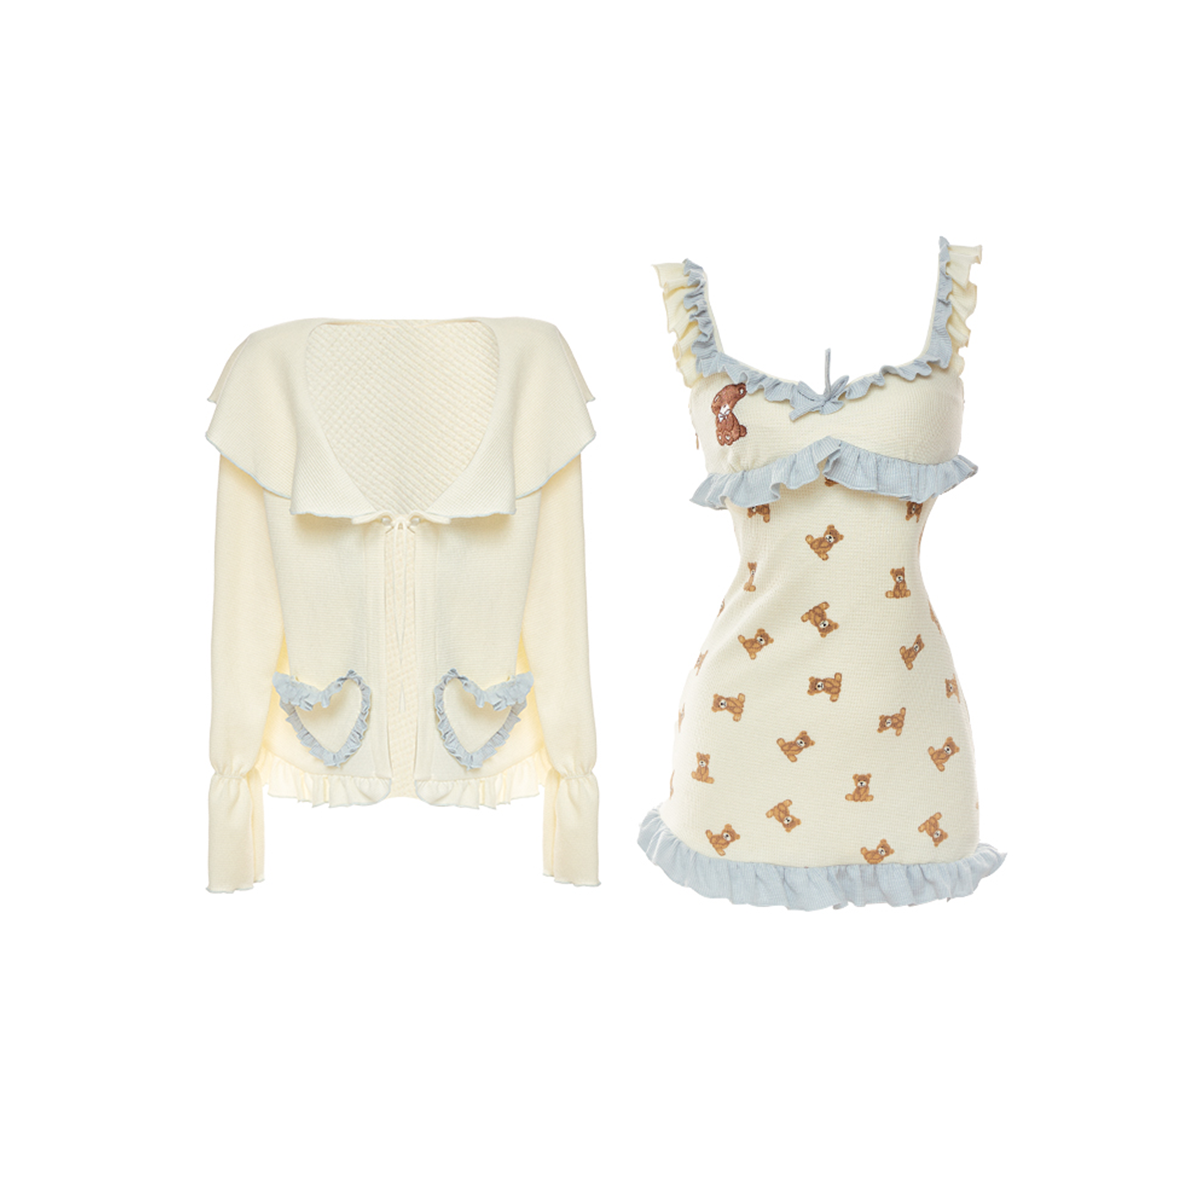 Early Autumn New Beige Bear Print Suspender Dress Pajamas Set - Jam Garden